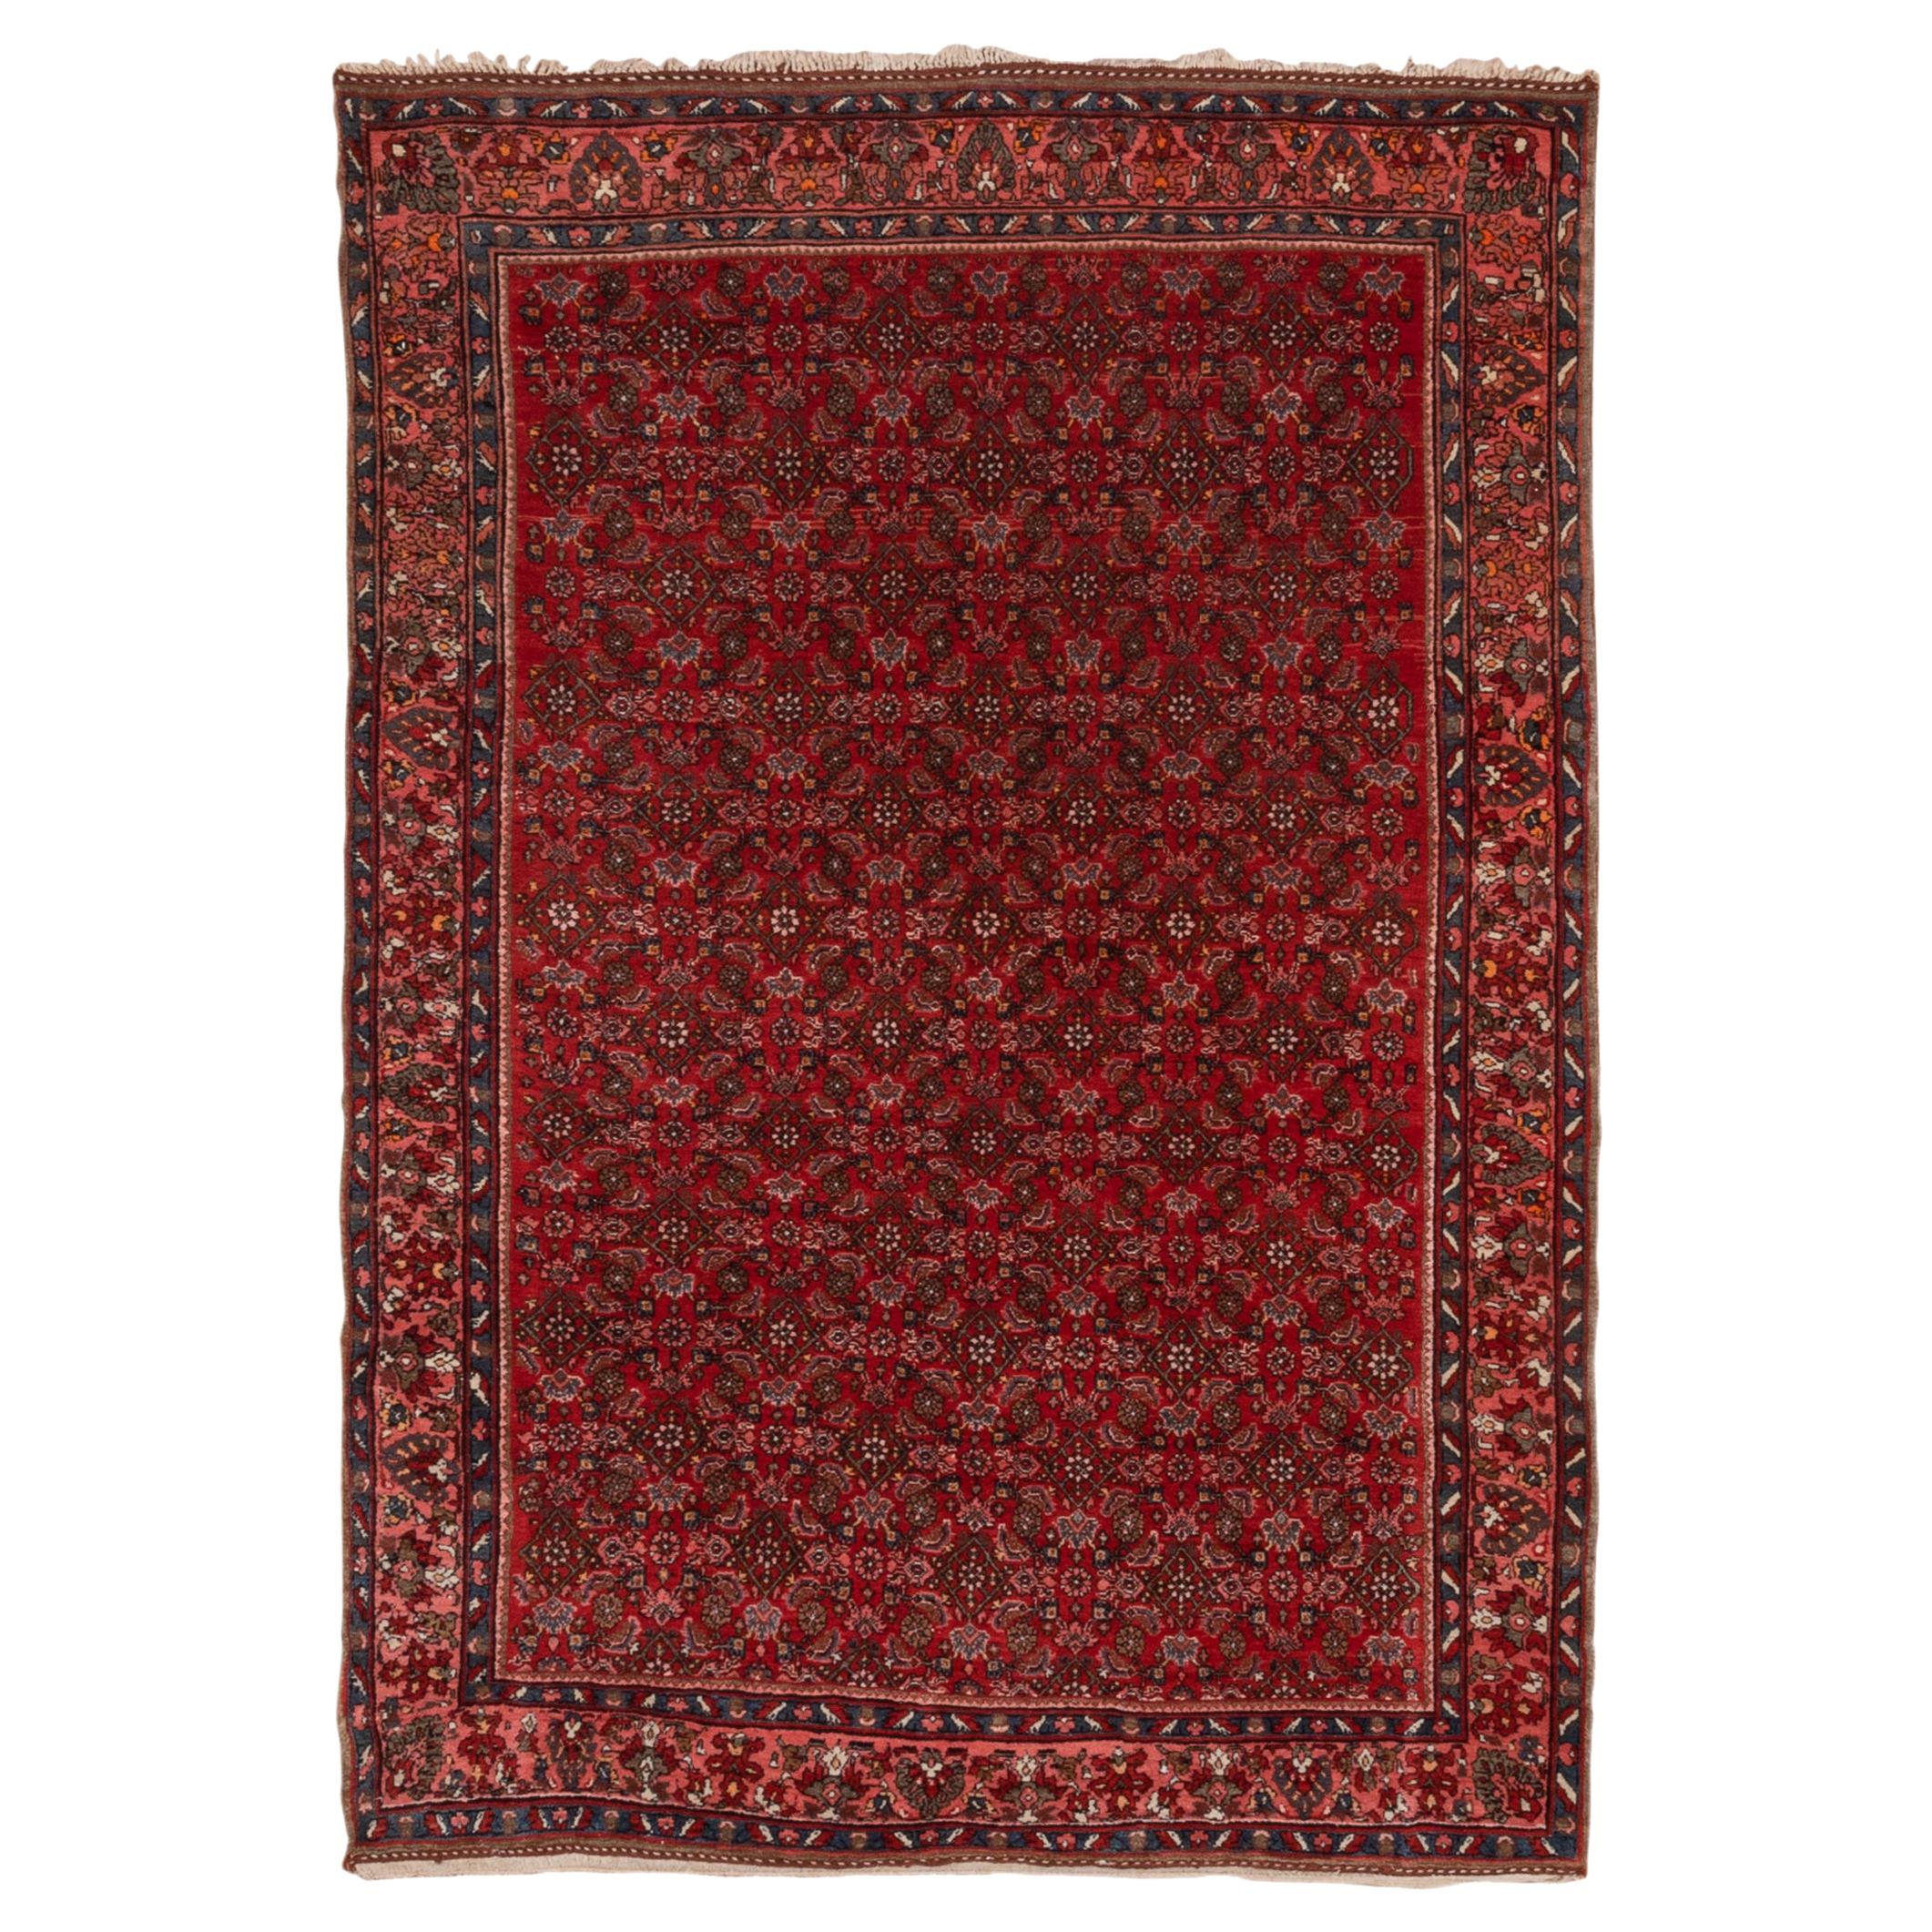 Fine Antique Persian Bidjar Carpet, Red Field, All-Over Field, Pink Borders